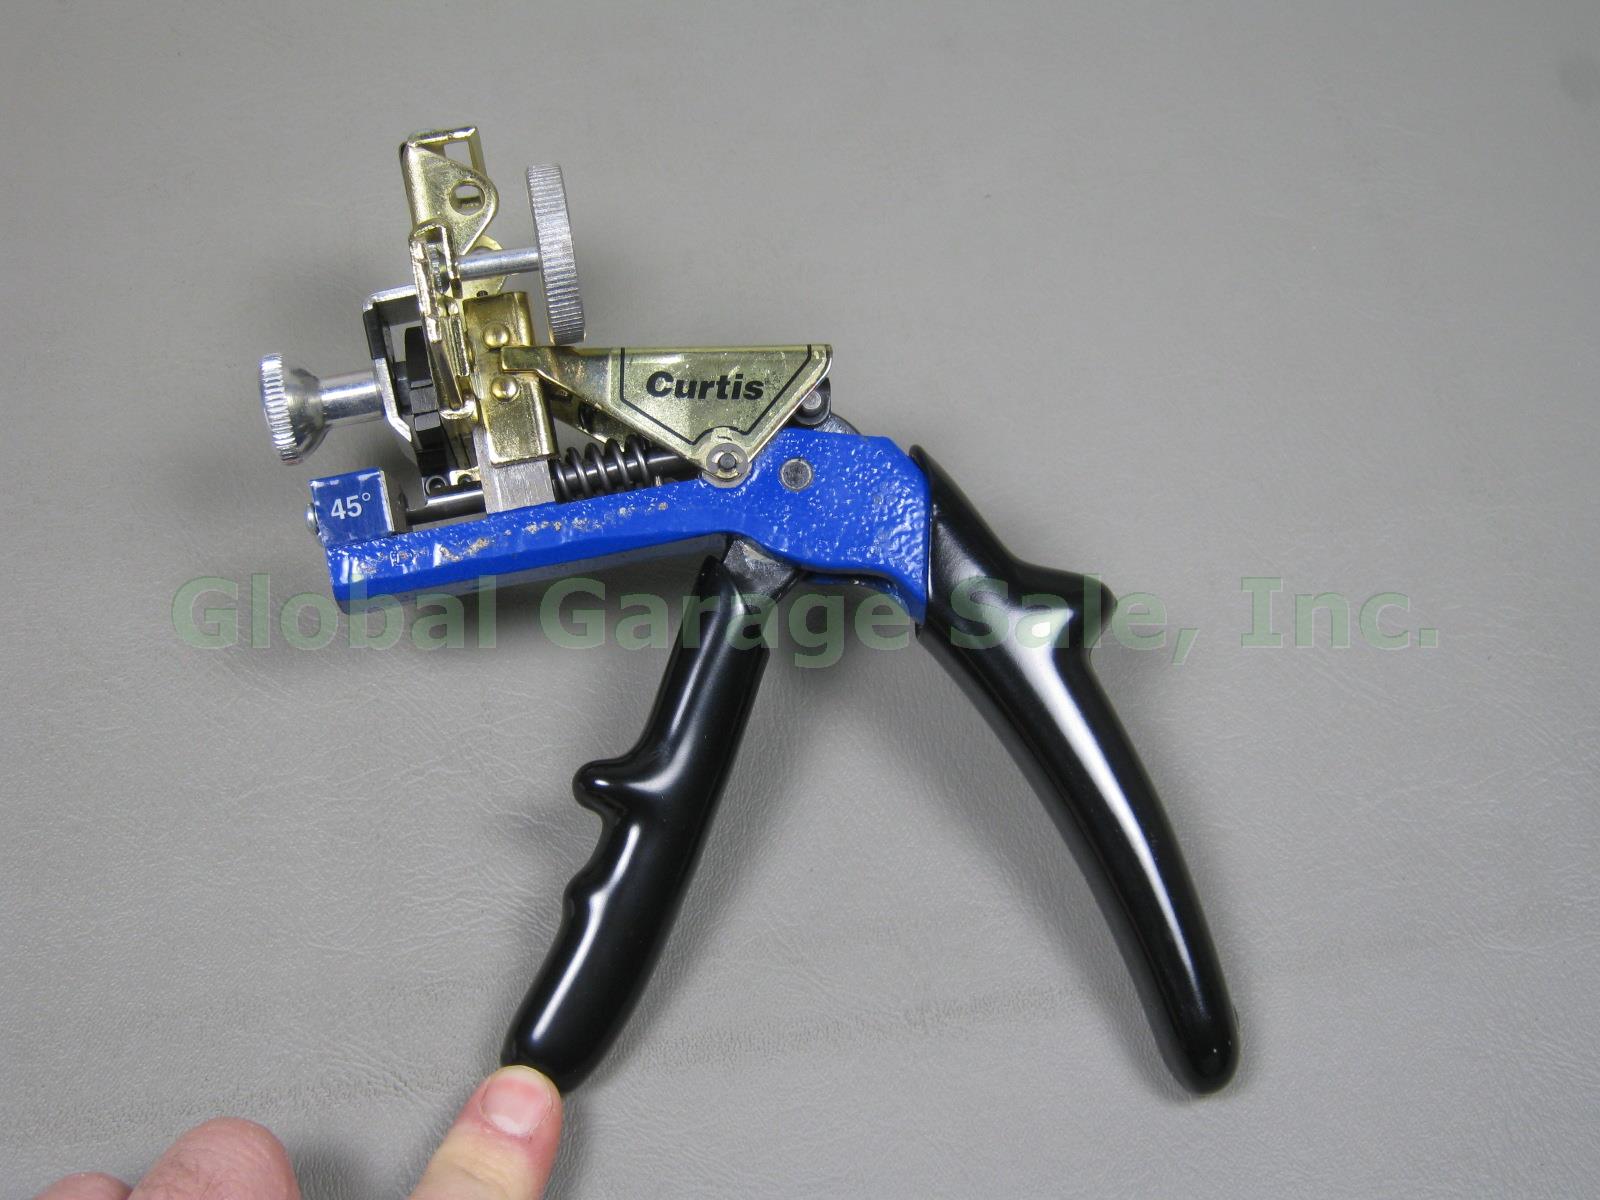 New Curtis 15 Code Key Blank Cutter Clipper 15XL-45 Degree Auto Locksmith Tool 1